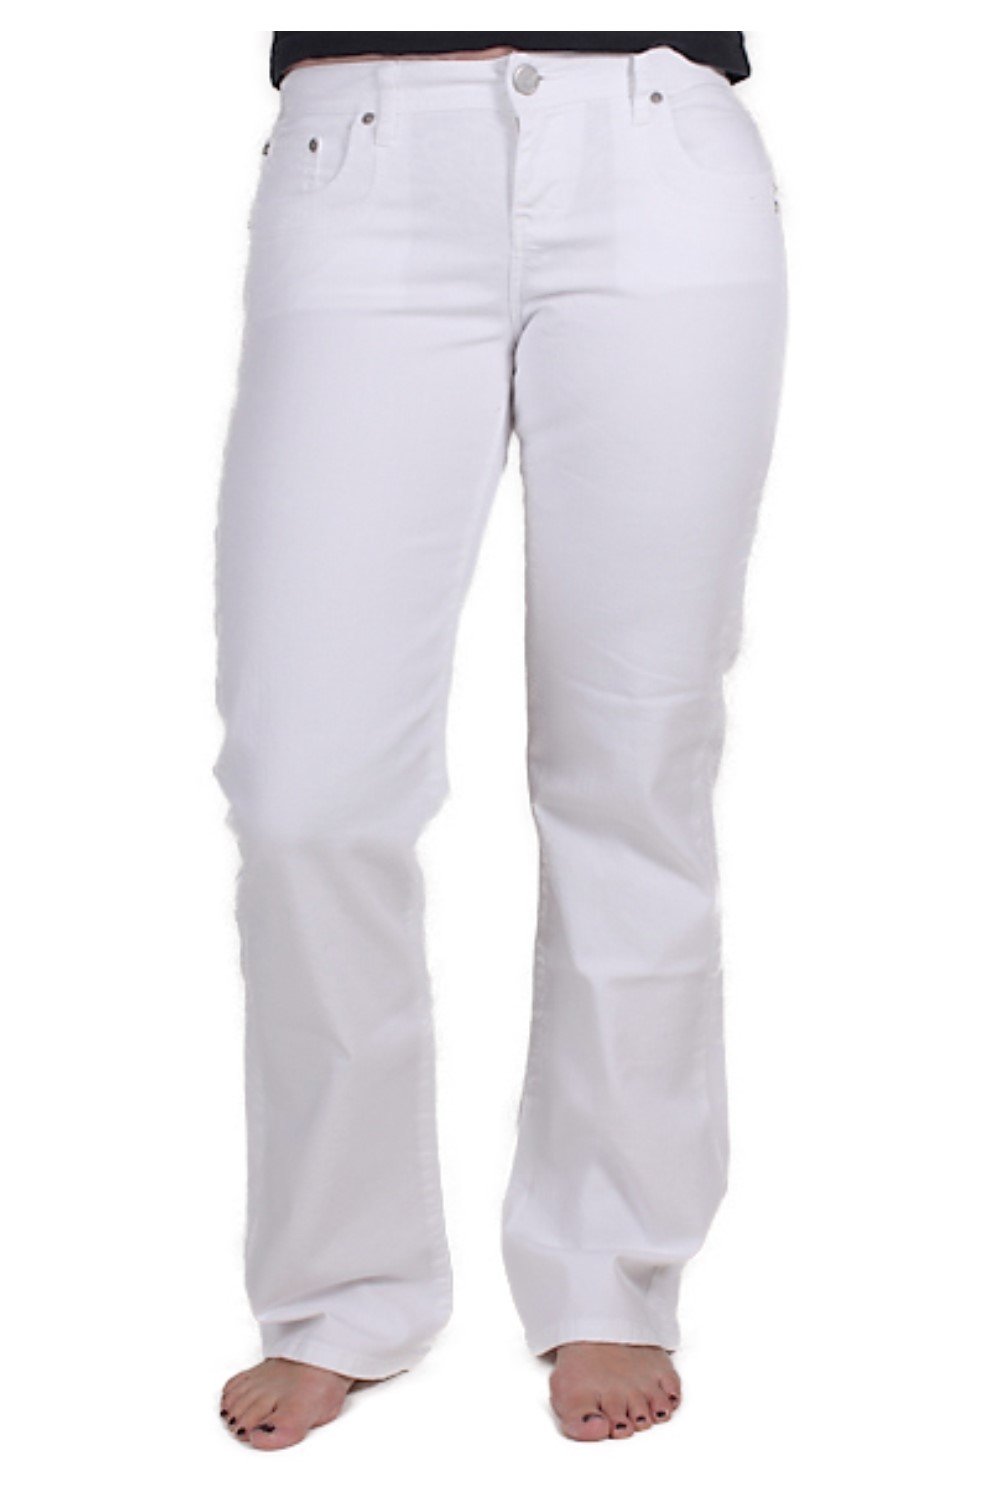 LTB Jeans Damen Valerie Jeans, Weiß (White 100), 27W / 30L